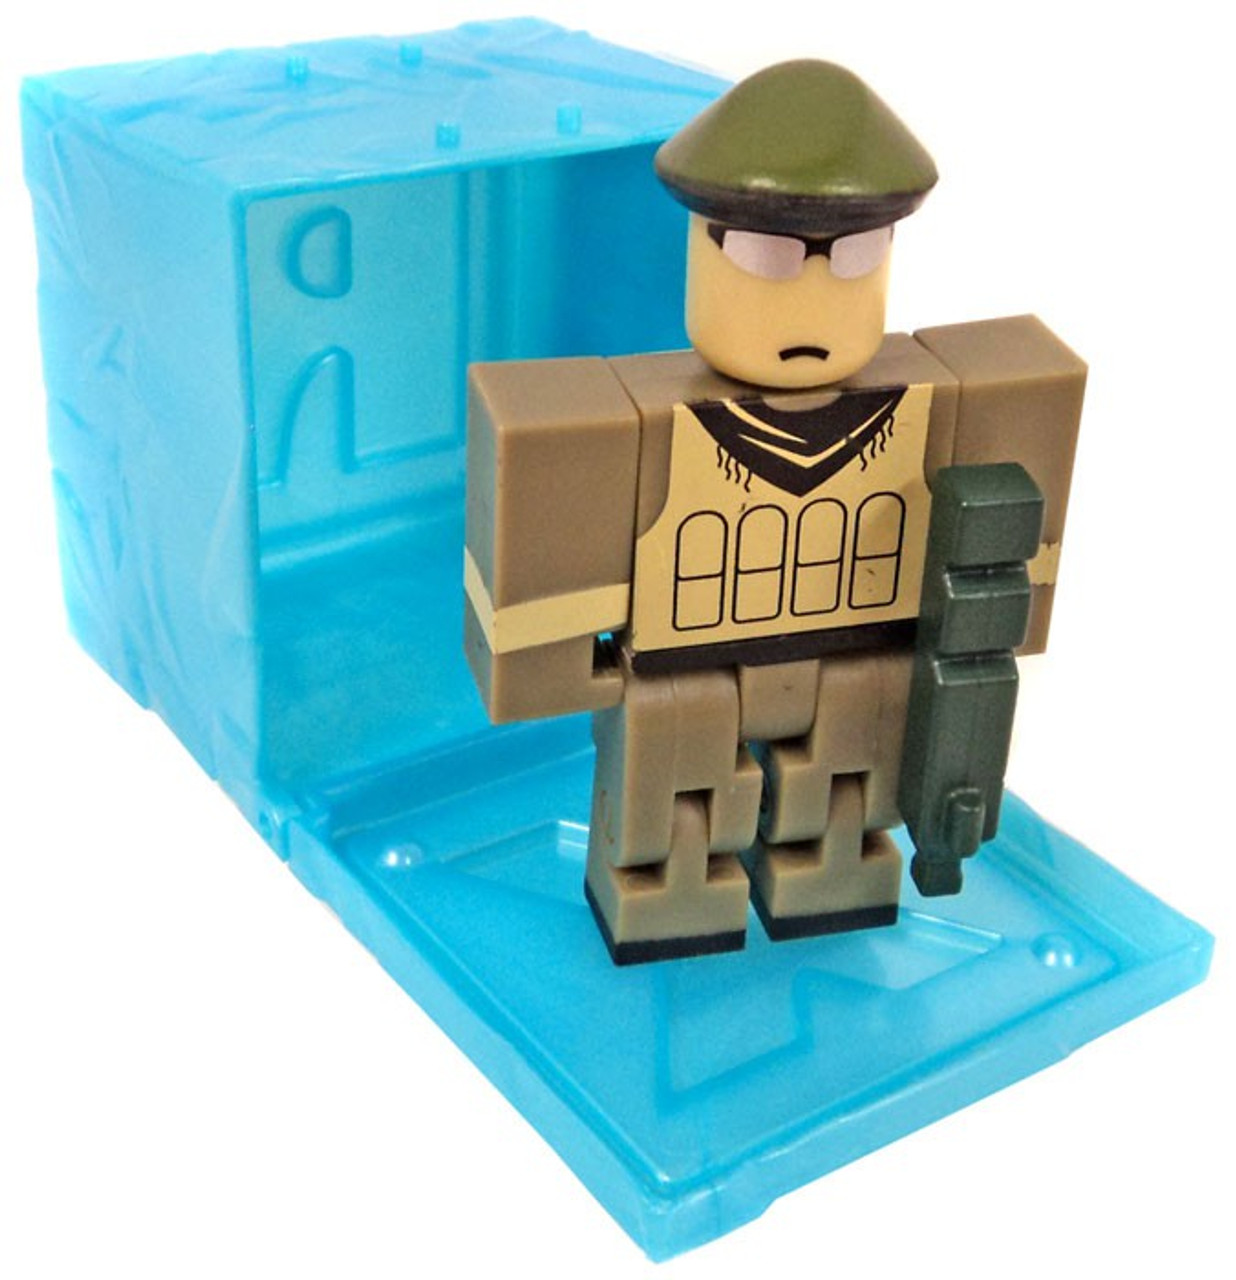 Ndjnnehxvjuglm - roblox series 1 mystery box cube asimo3089 figure toy with